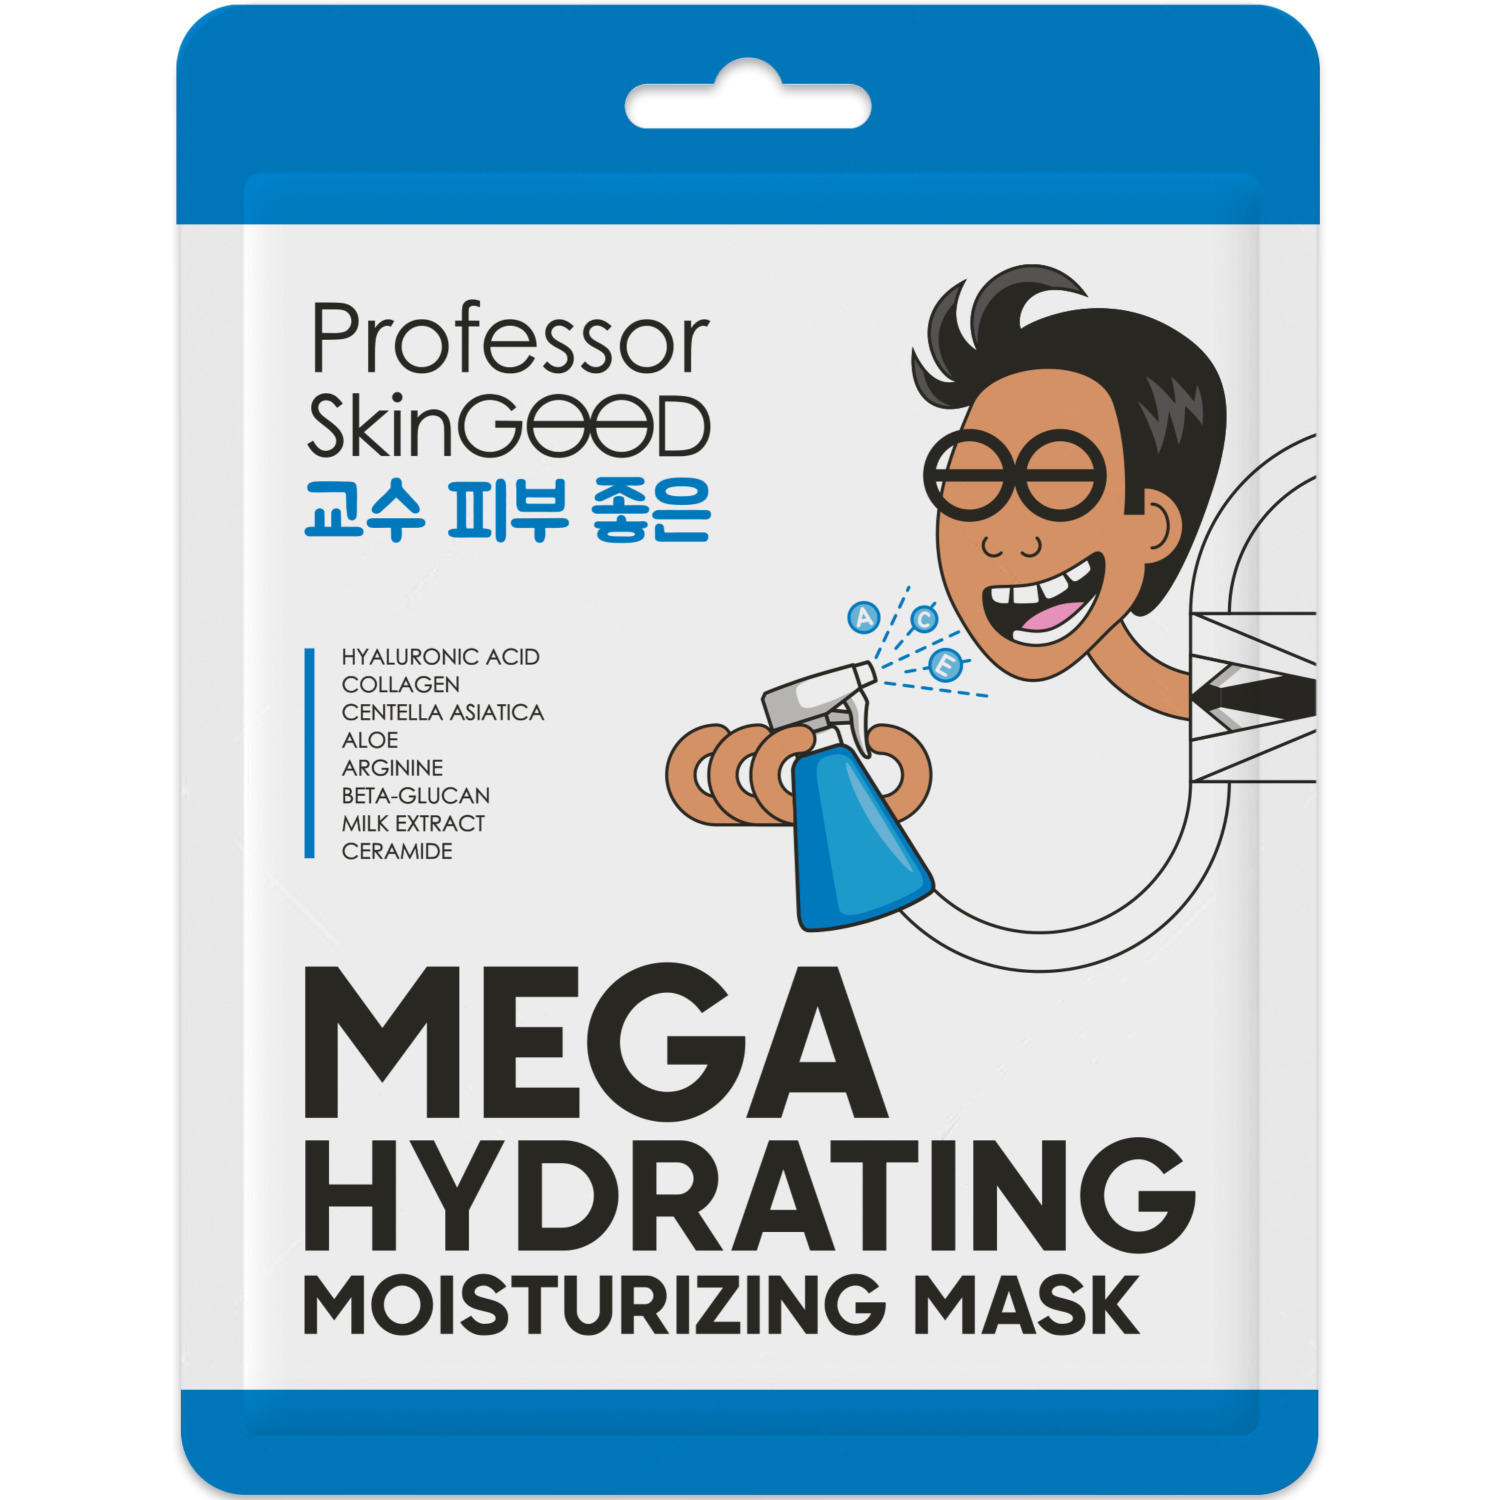 professor skingood hemp extract antistress mask Professor SkinGOOD Увлажняющая маска Mega Hydrating Moisturizing Mask, 25 г (Professor SkinGOOD, Маски)